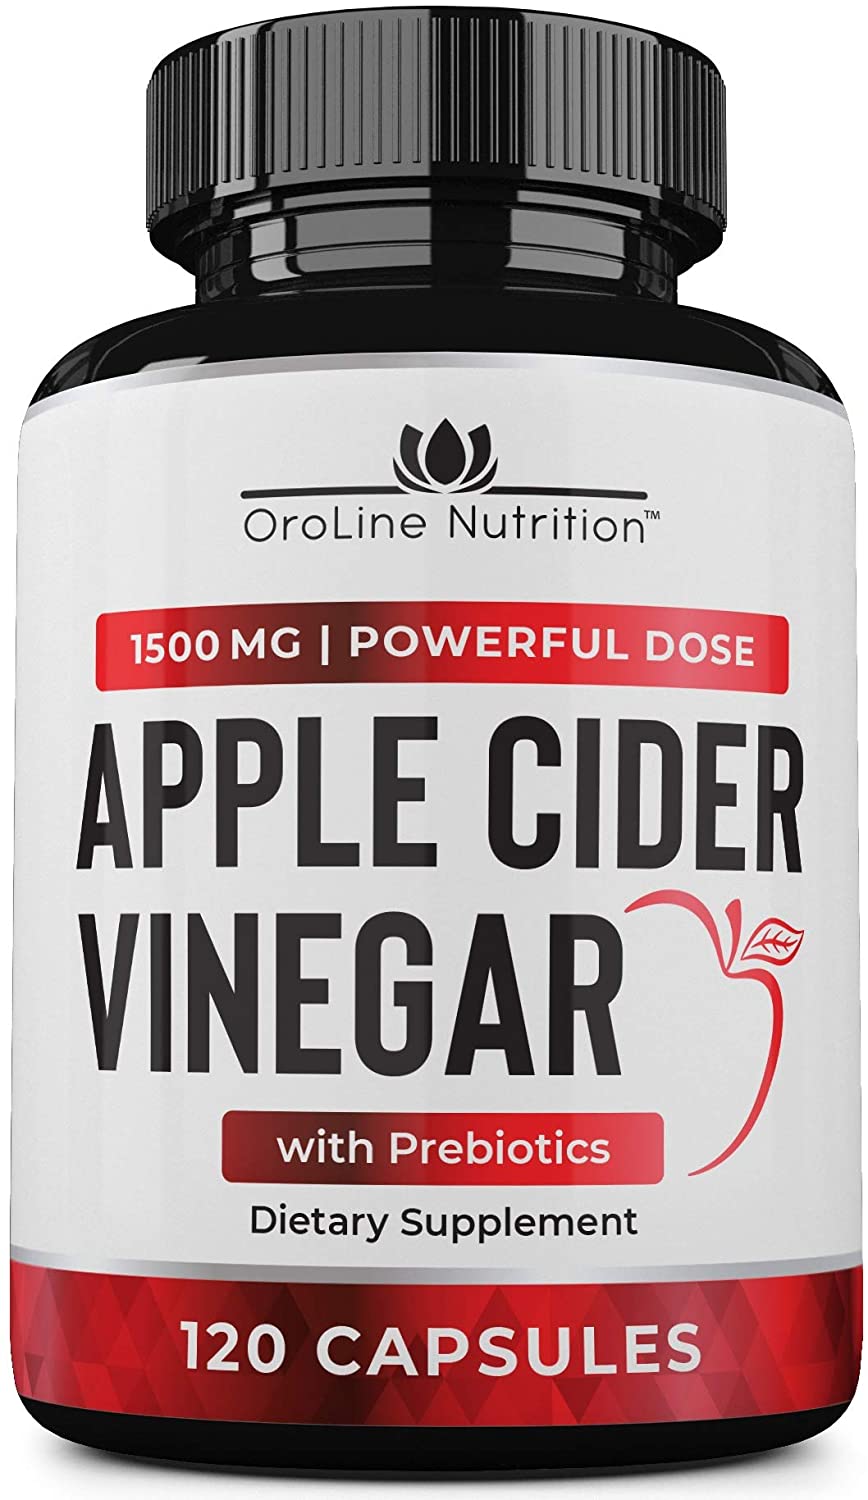 2. OroLine Nutrition Organic Apple Cider Vinegar Capsules